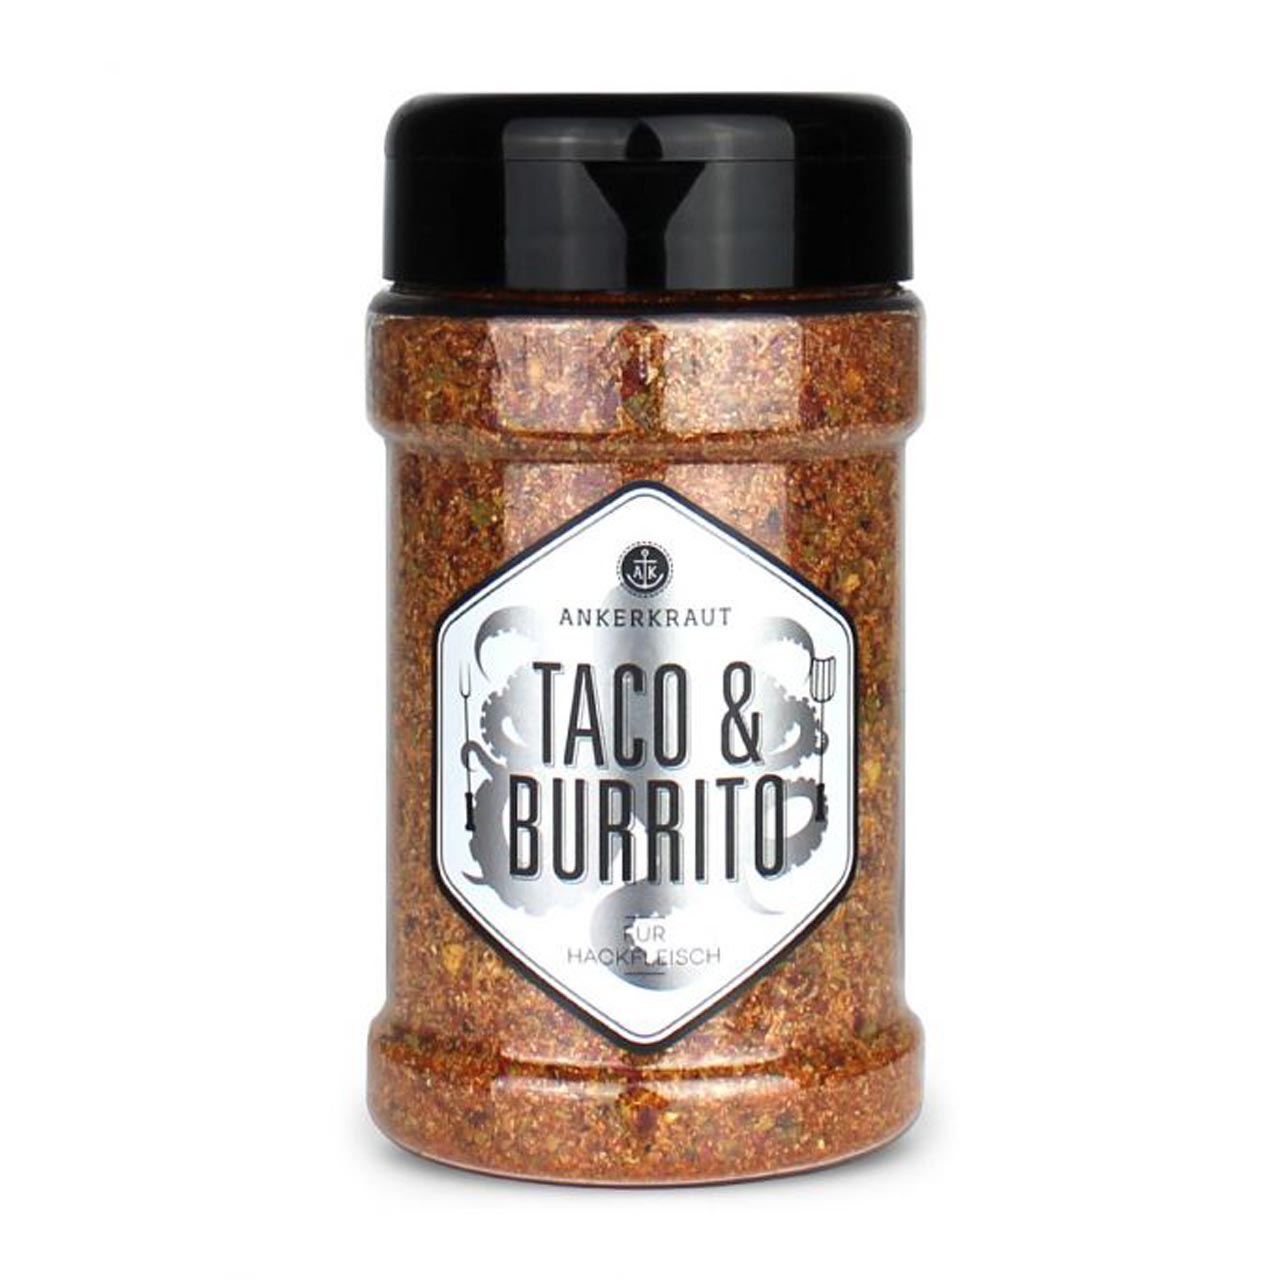 Ankerkraut Taco & Burrito, 190 g Streuer